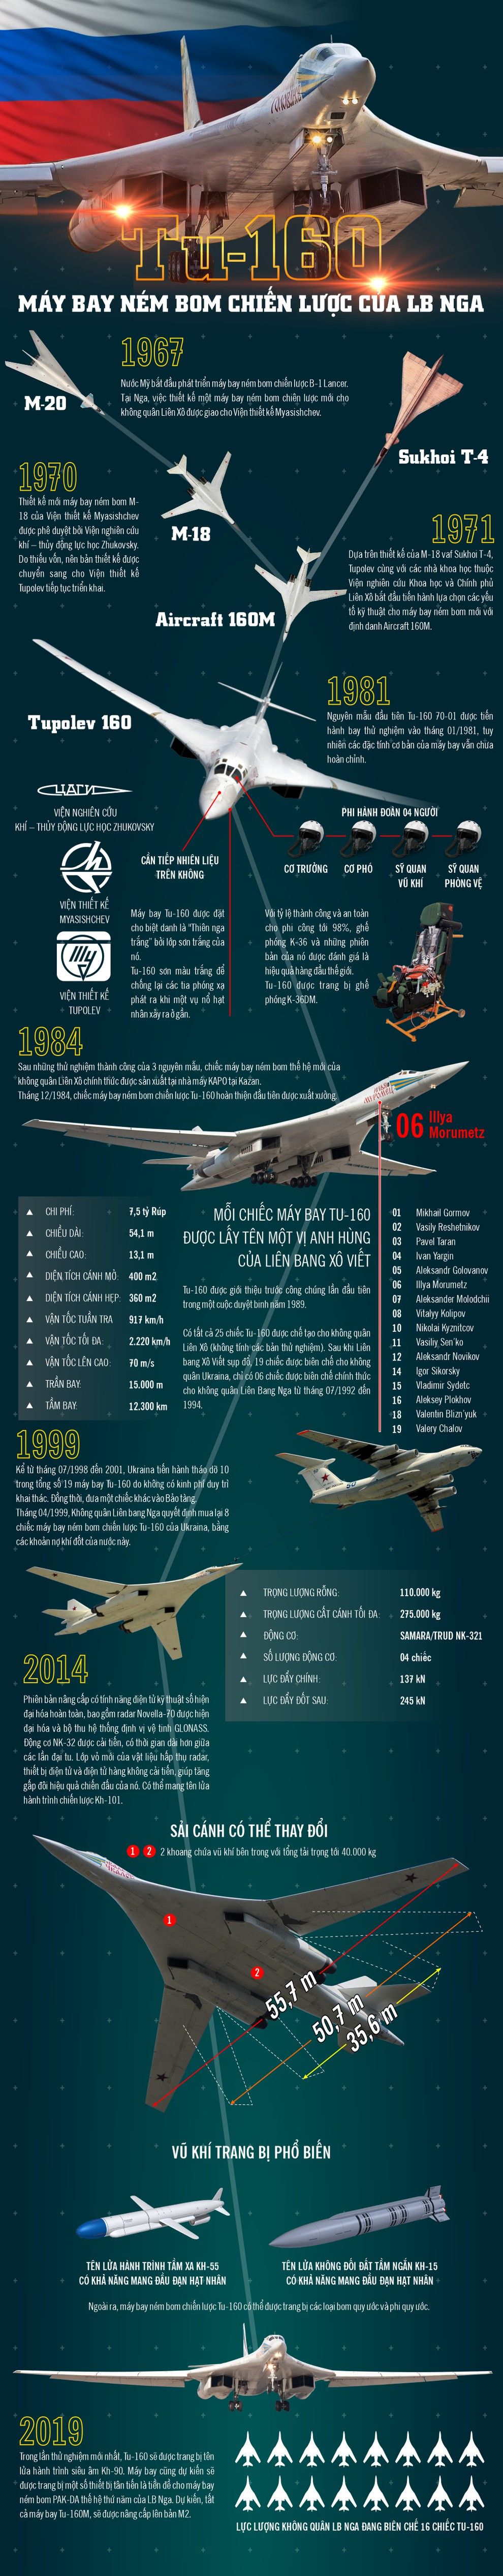 infographic may bay nem bom chien luoc tu 160 cua khong quan lien bang nga loi hai co nao